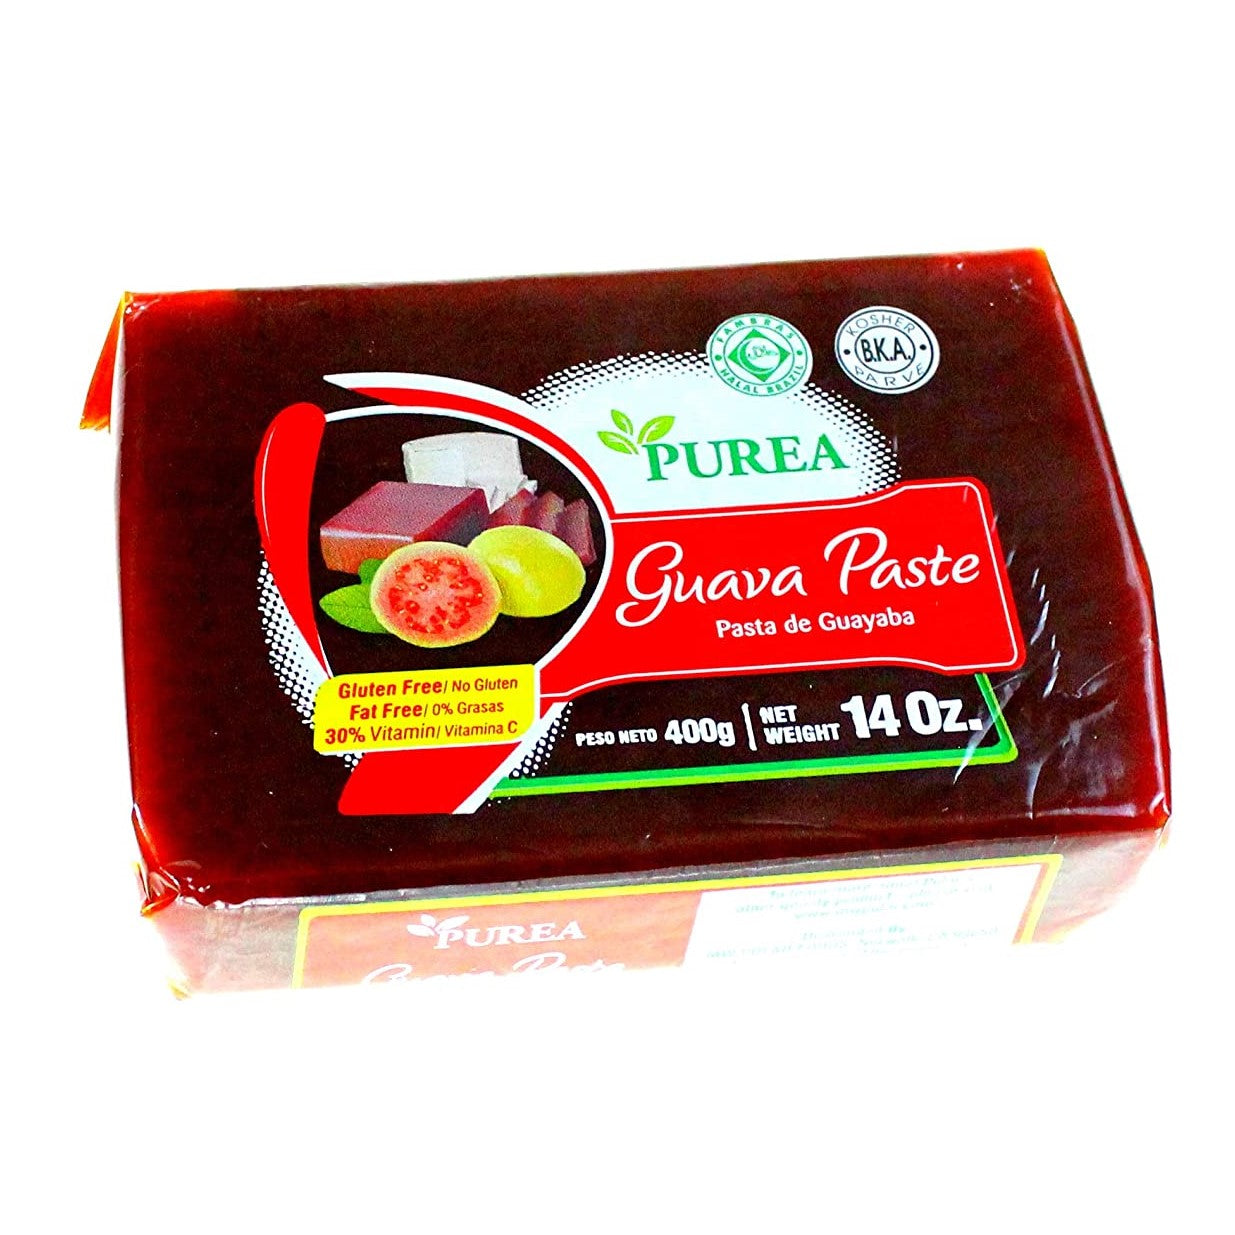 Purea Guava Paste - Pasta de Guavaba 14oz